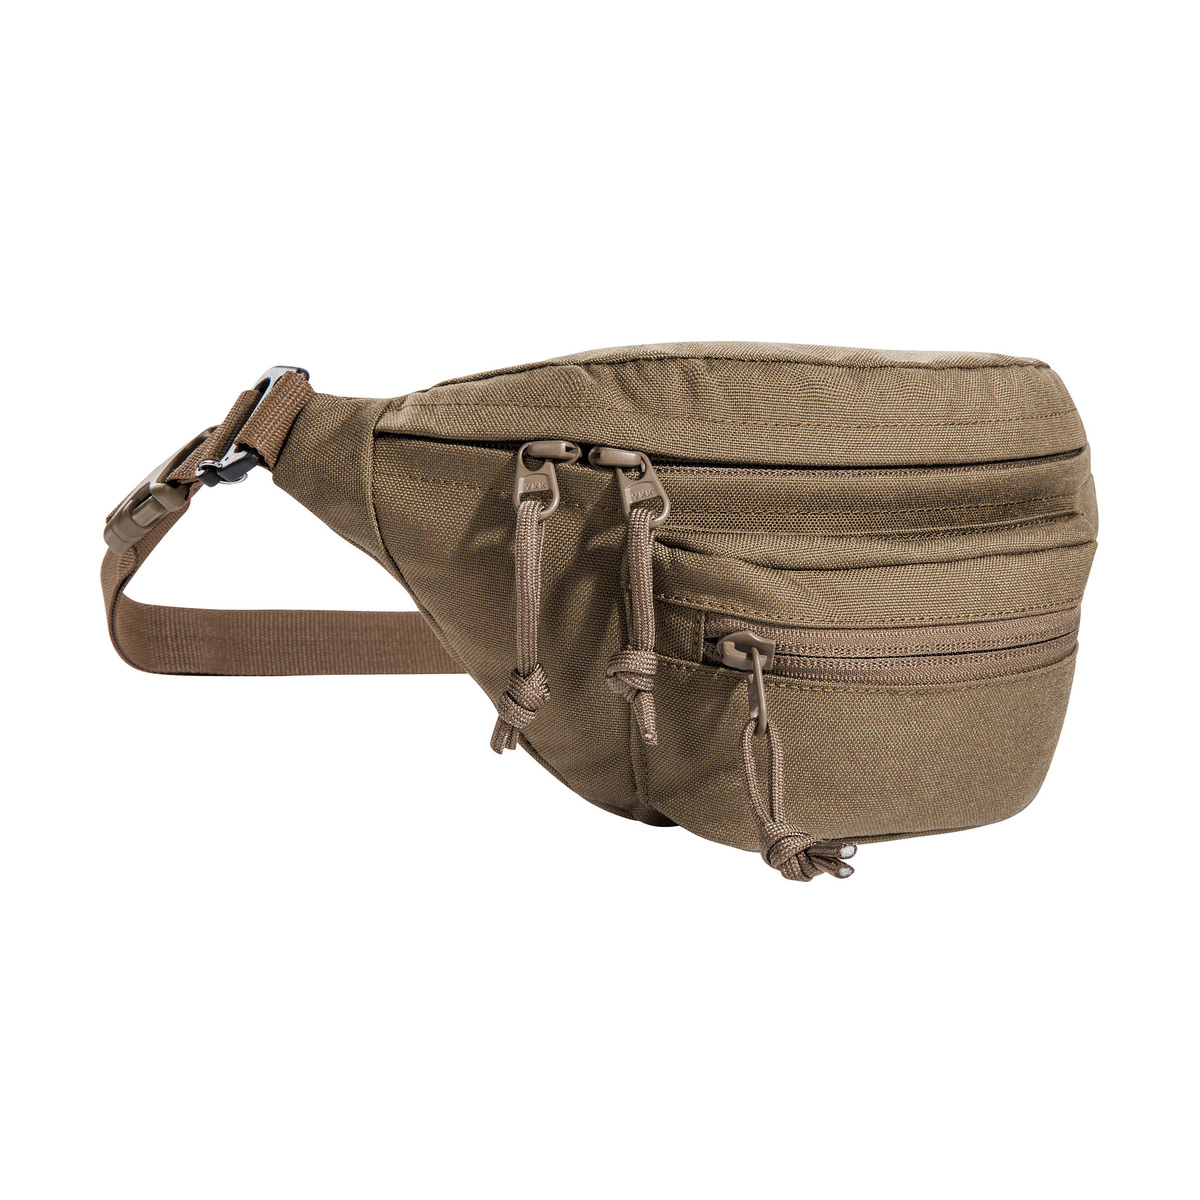 Modular Hip Bag Coyote Brown